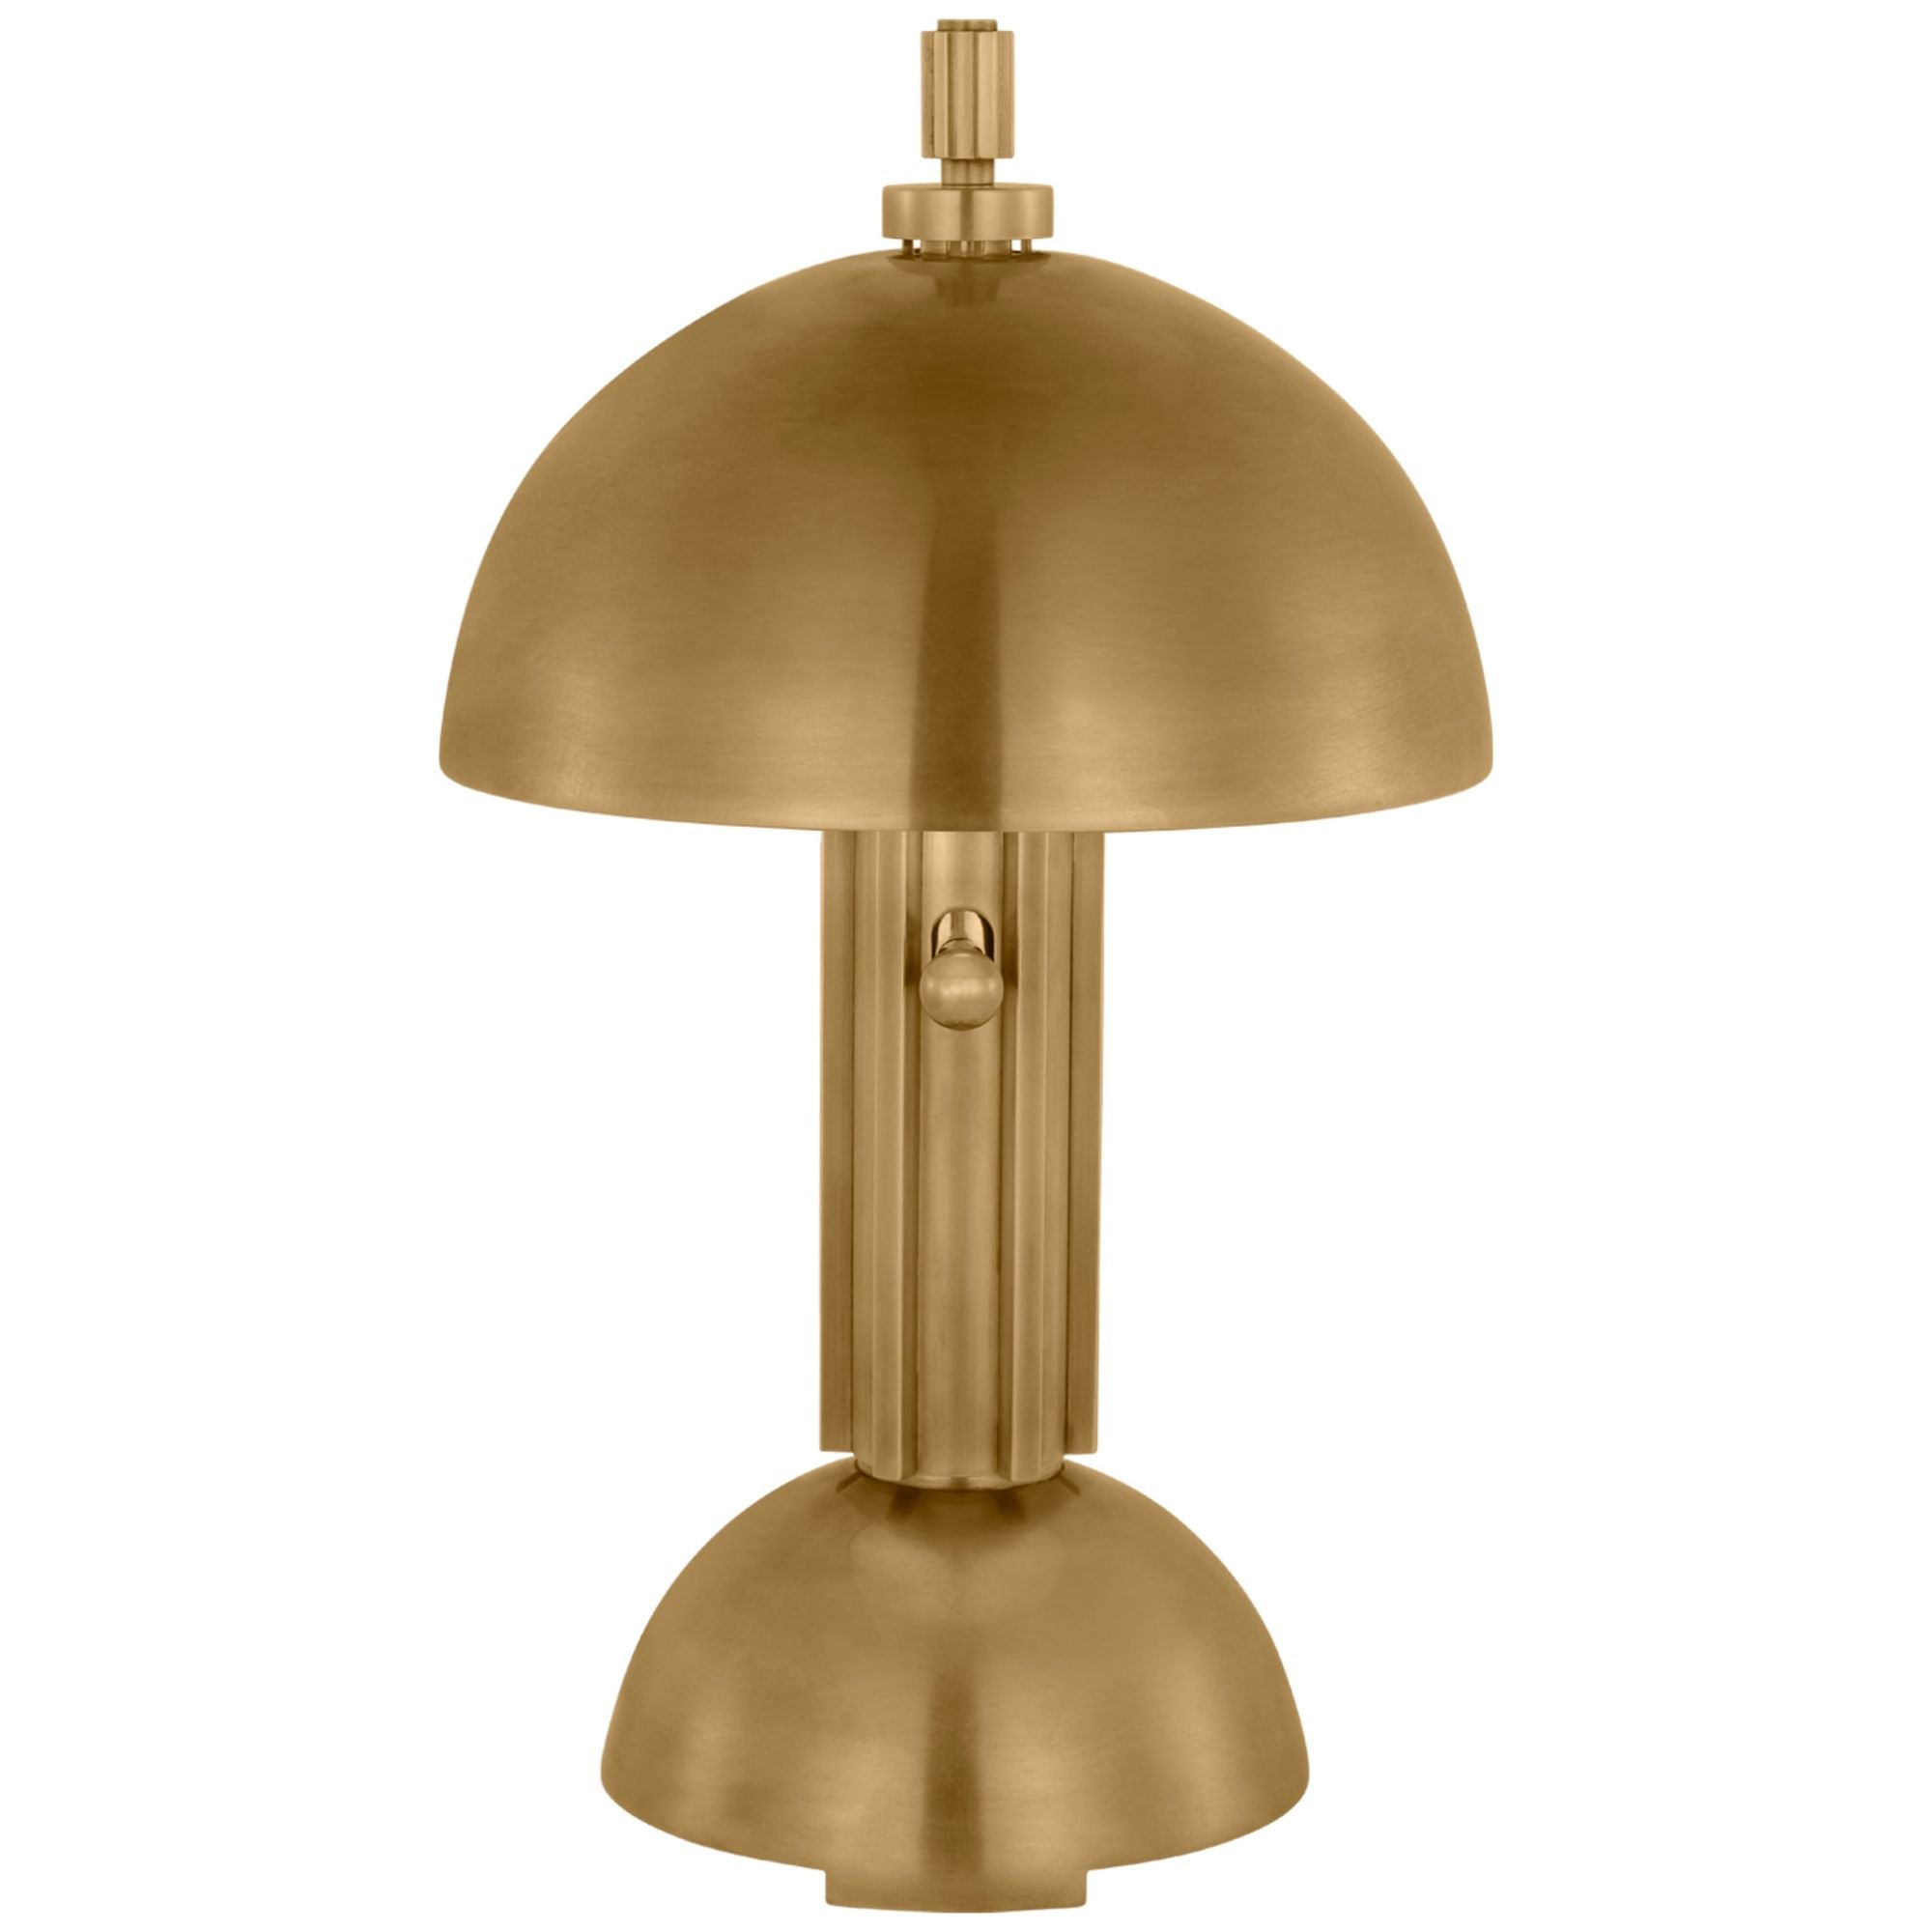 RL3031NBECNB by Visual Comfort - Barton Desk Lamp in Natural Brass